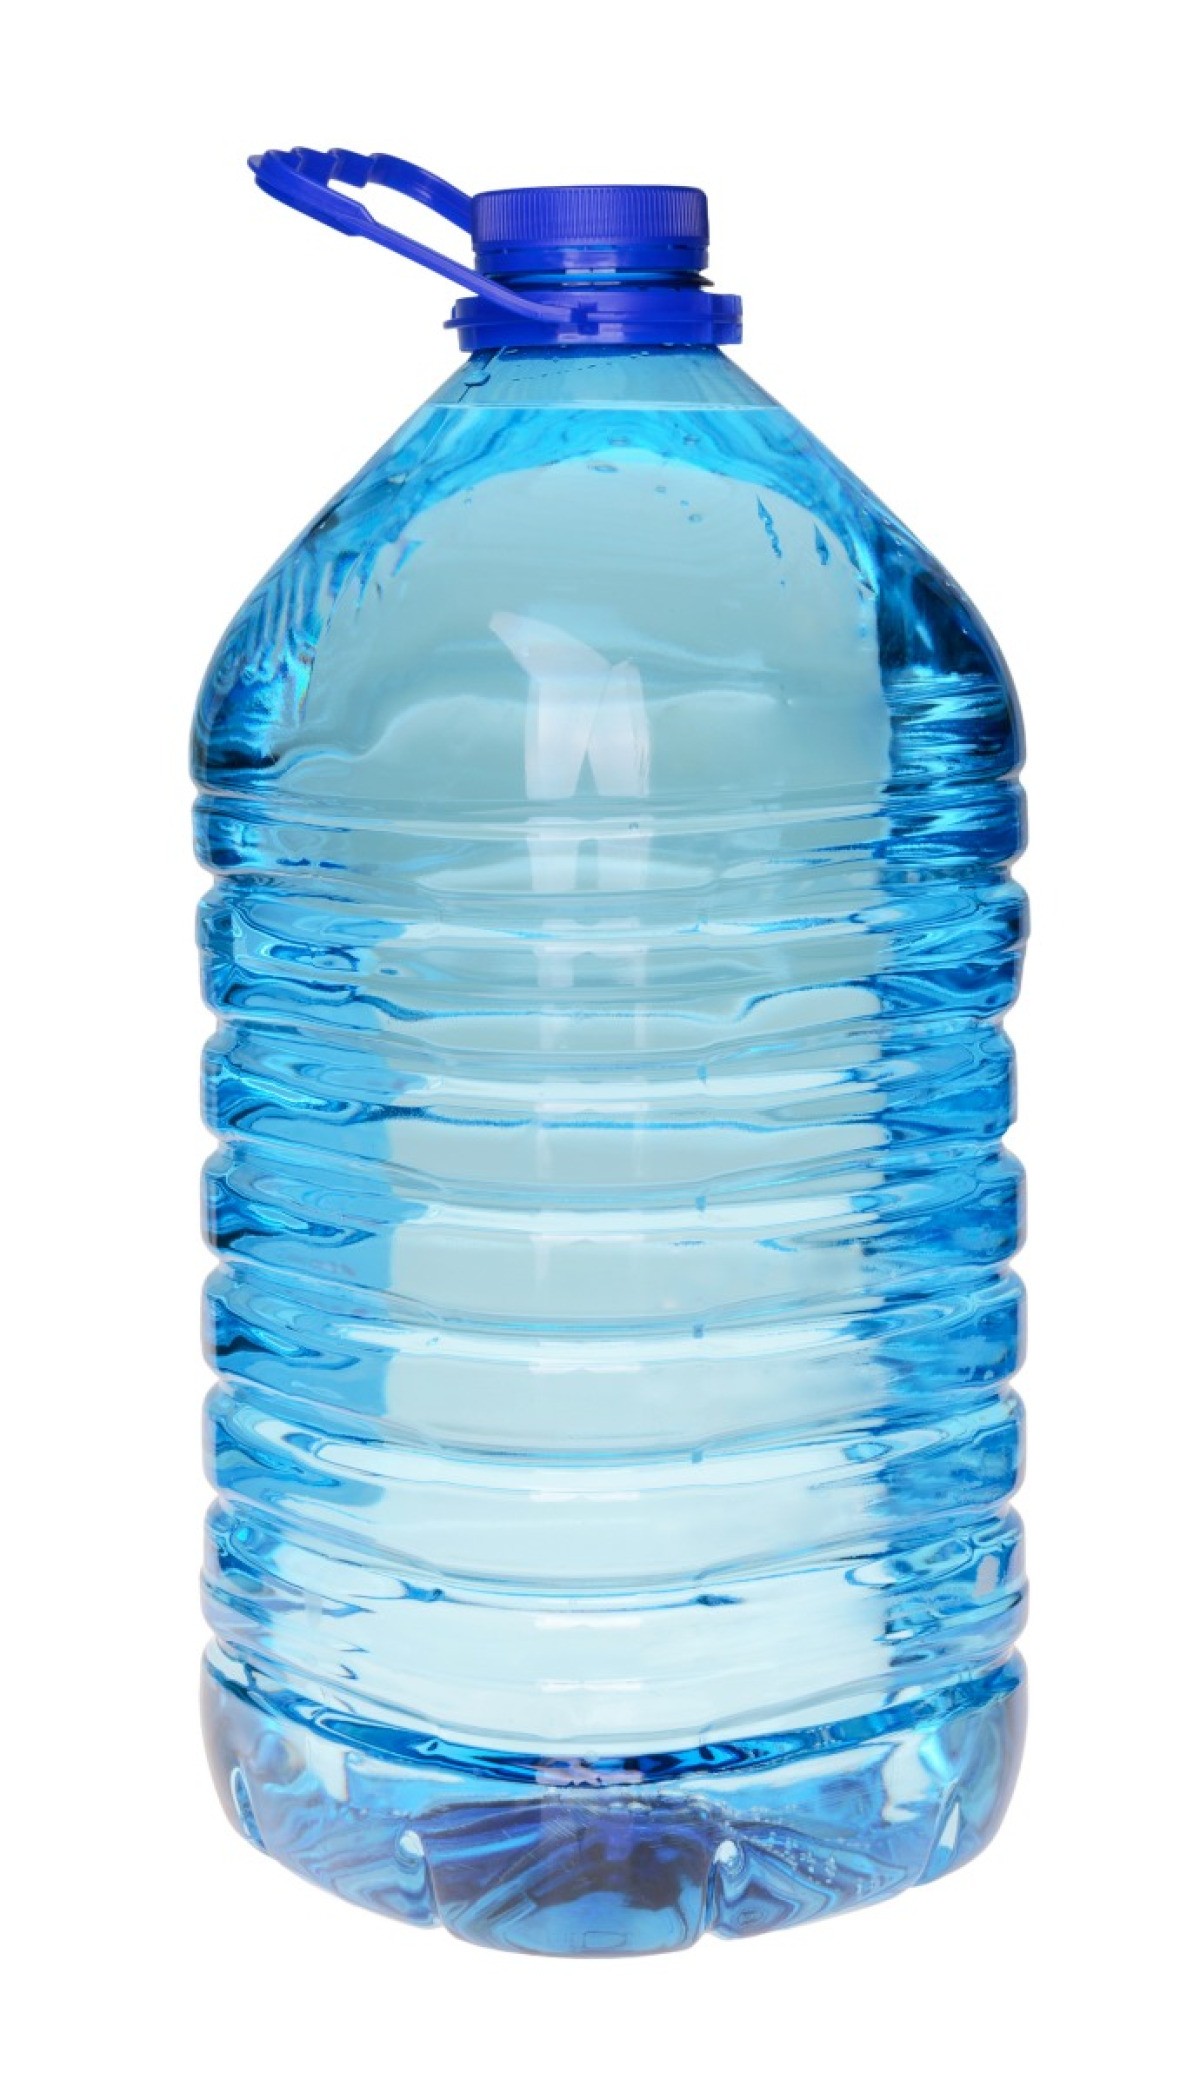 97 5 воды. Бутыль для воды 5 л. Бутылка воды 5 л. Баклажка воды. Пятилитровый бутыль воды.